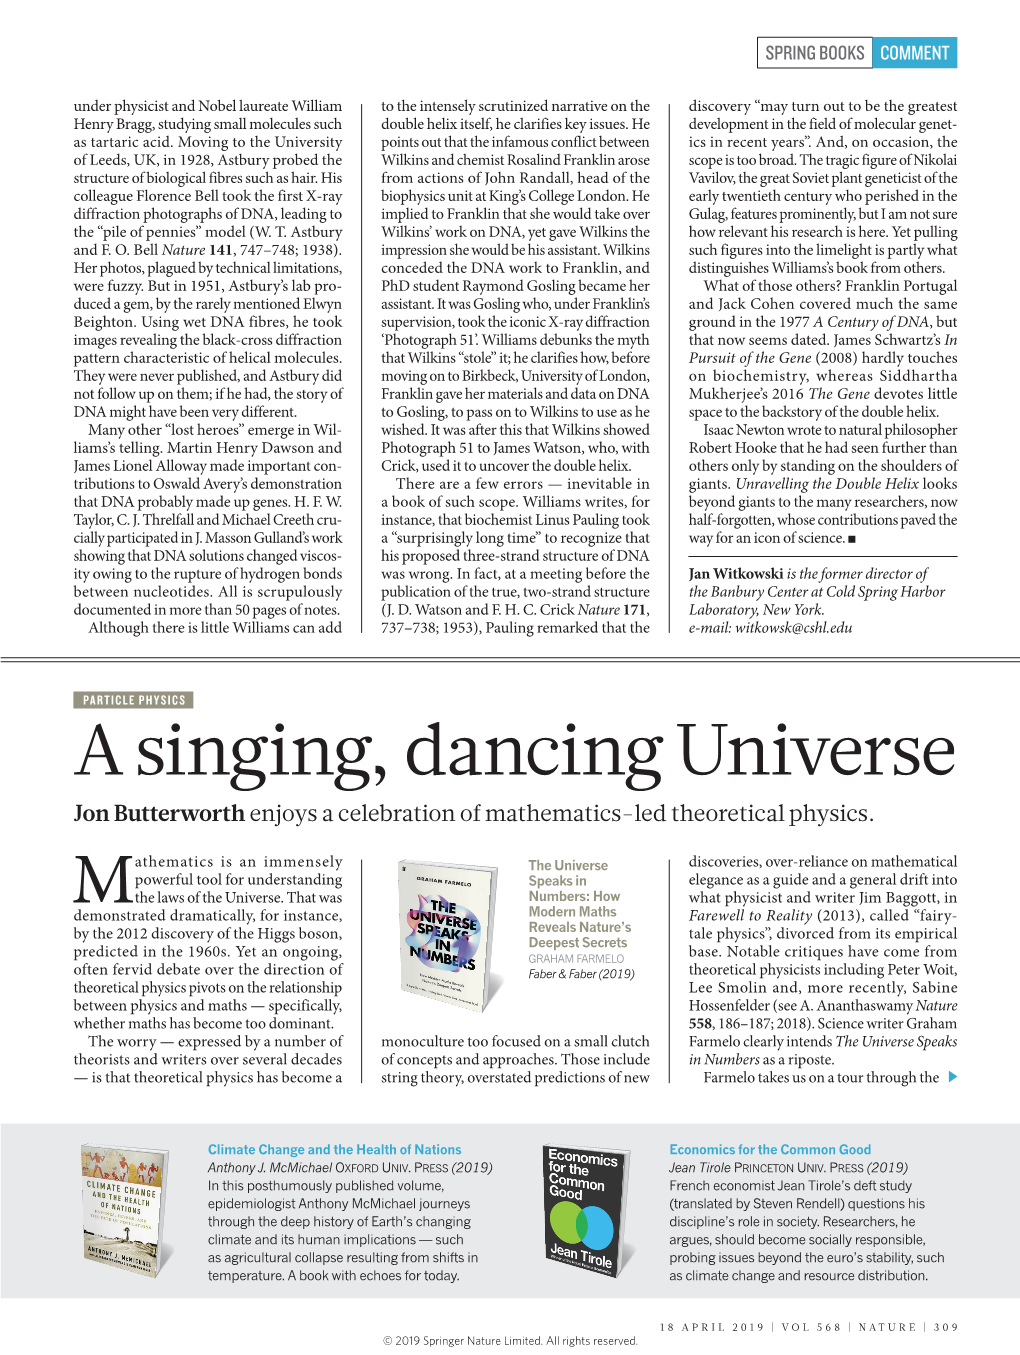 A Singing, Dancing Universe Jon Butterworth Enjoys a Celebration of Mathematics-Led Theoretical Physics